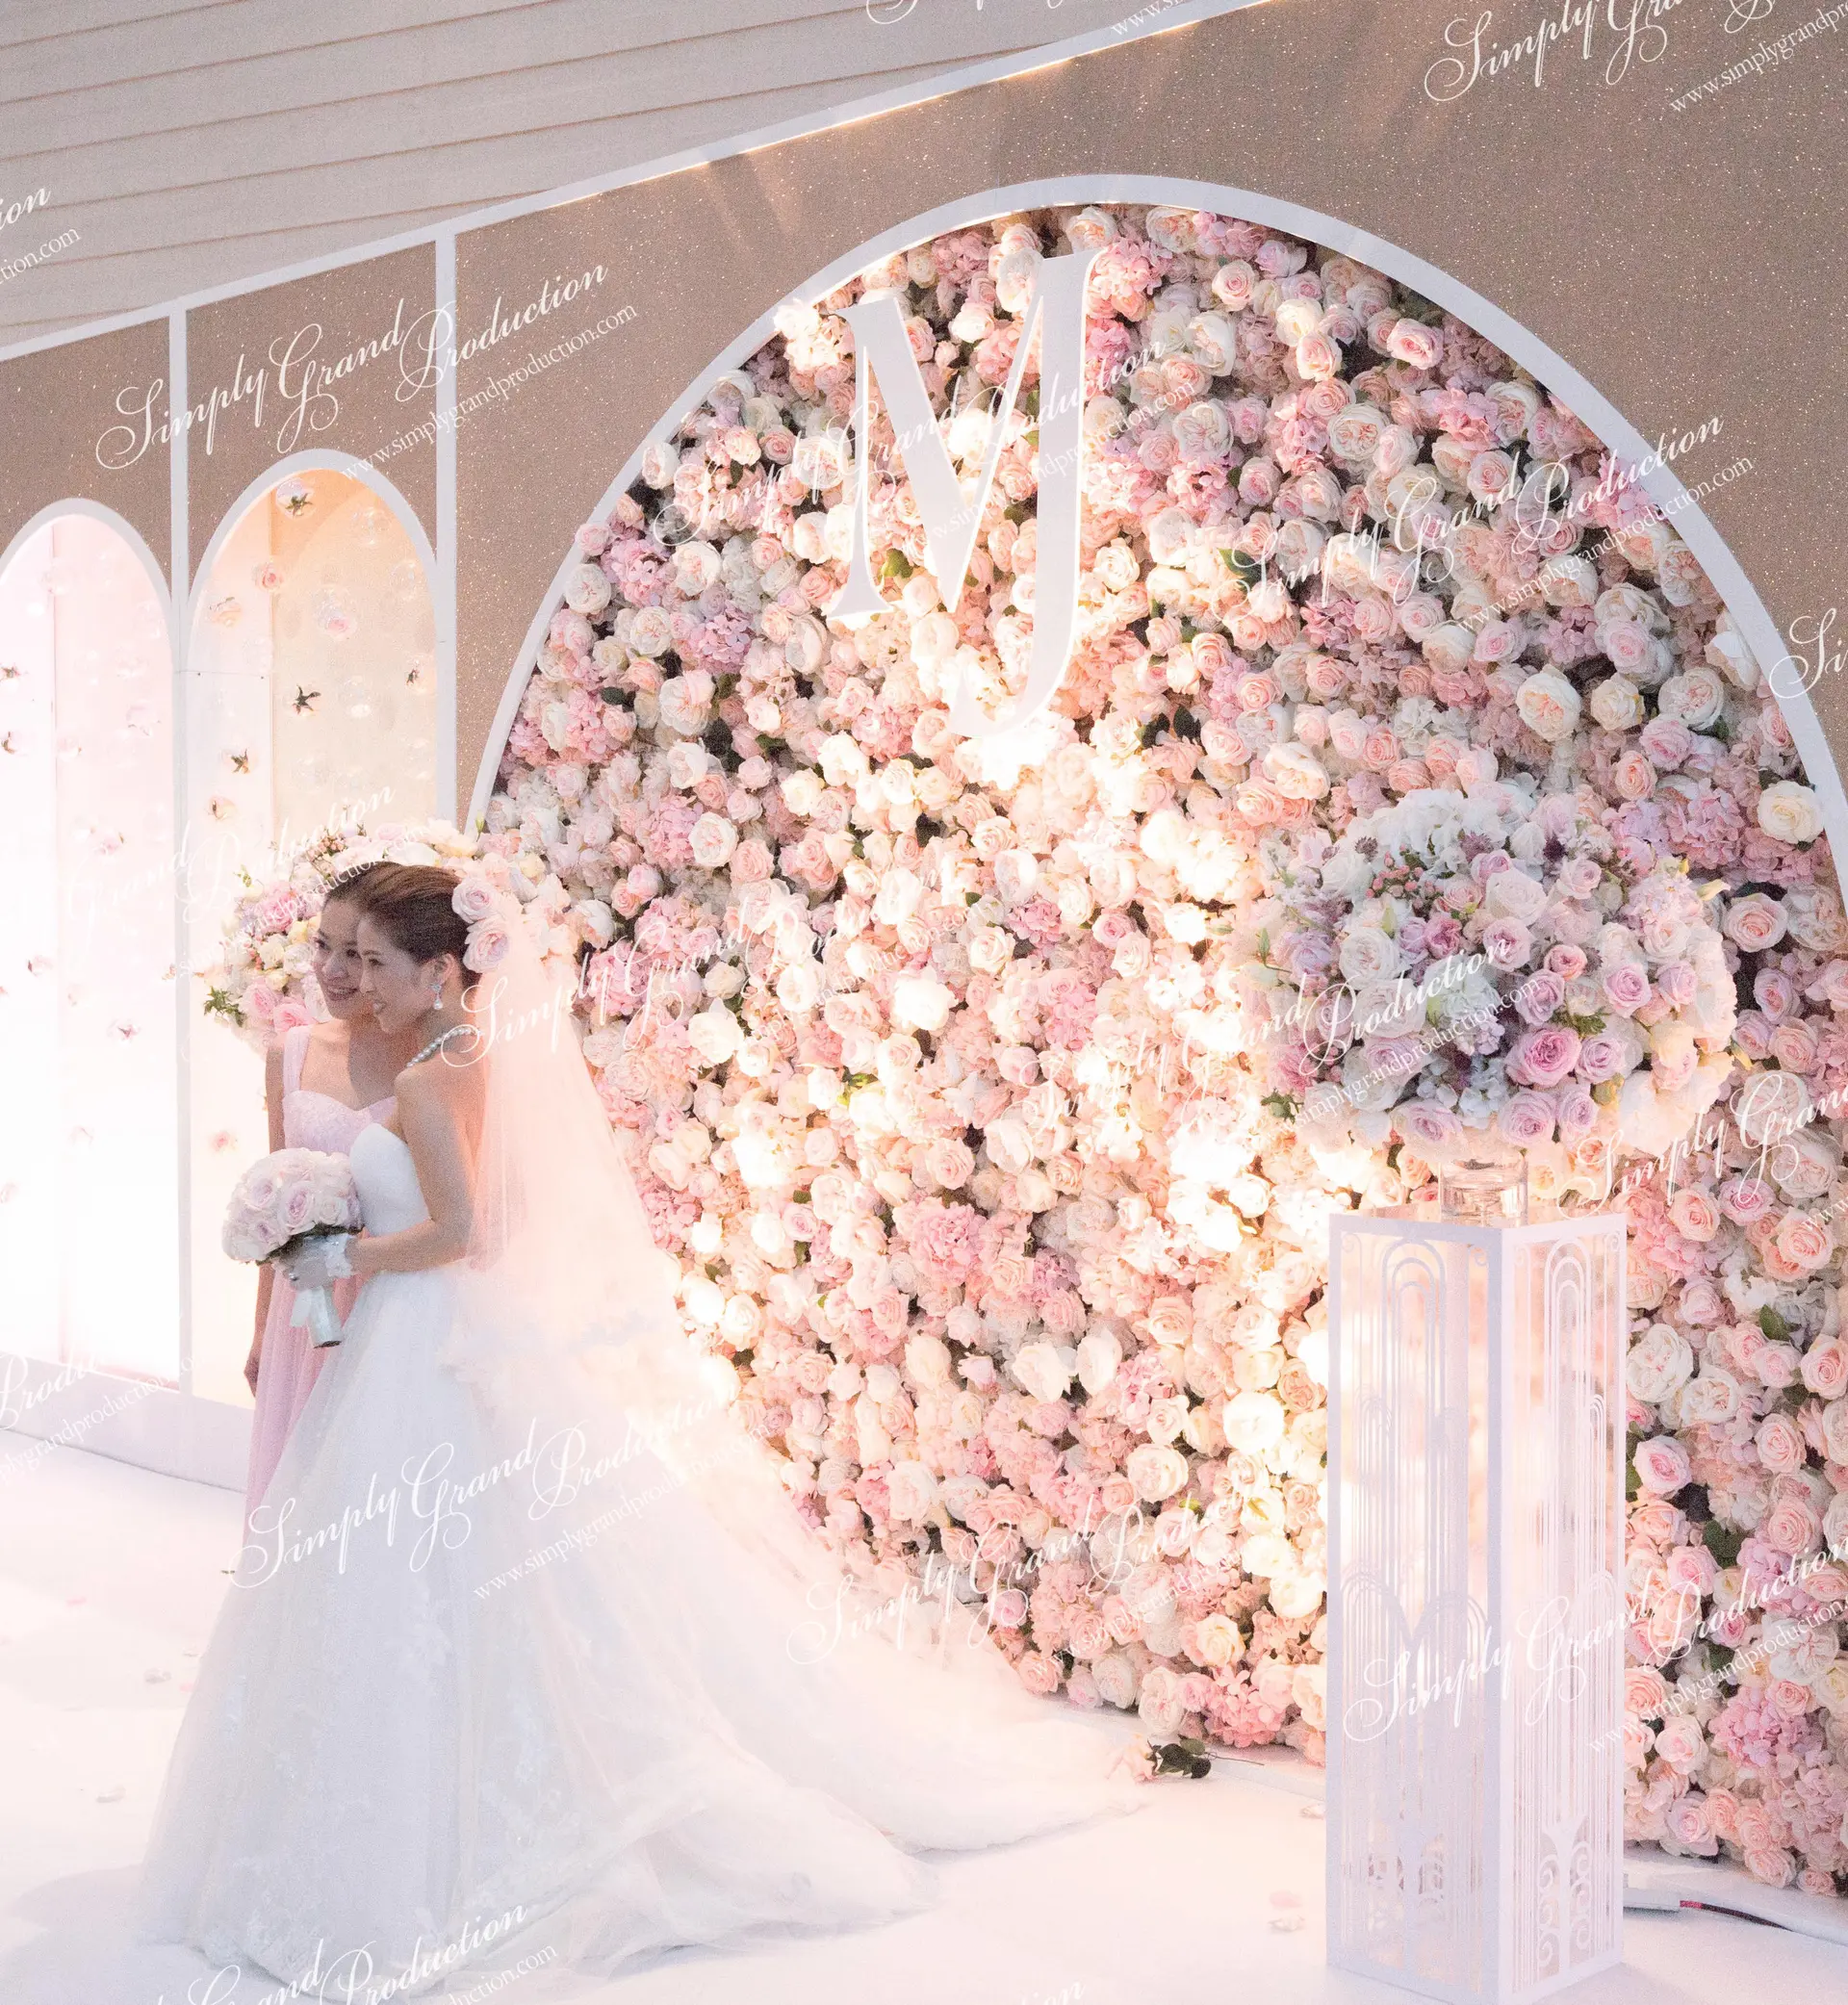 Simply_Grand_Production_wedding_decoration_silk_flower_wall_bride_gown_Four_Seasons_1_13